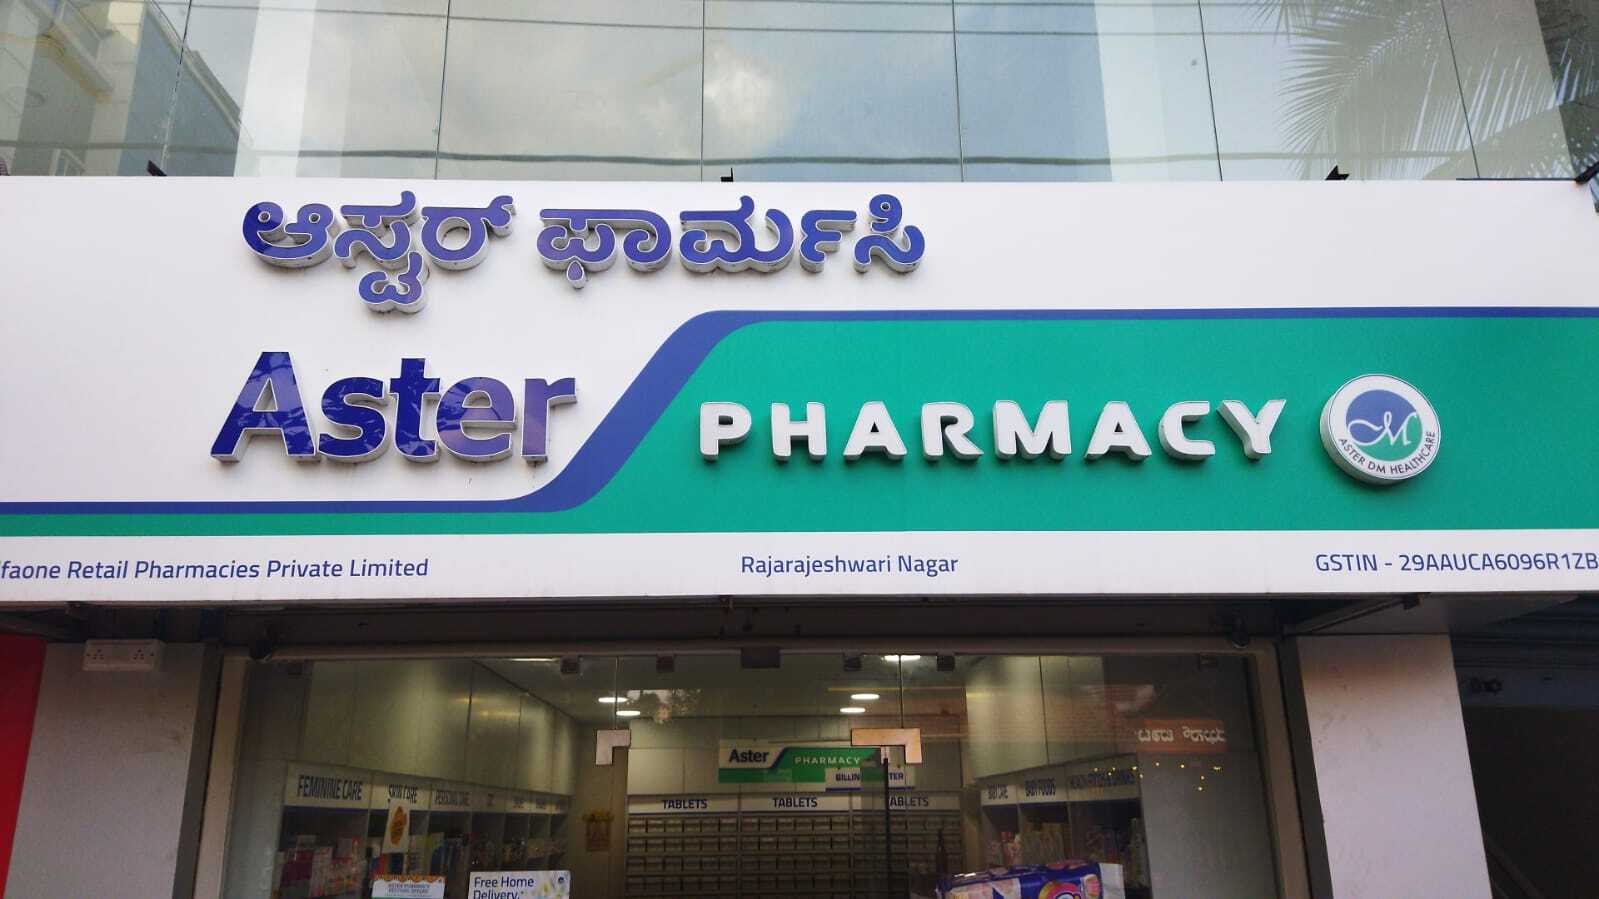 Aster Pharmacy in Rajarajeshwari Nagar, Bangalore